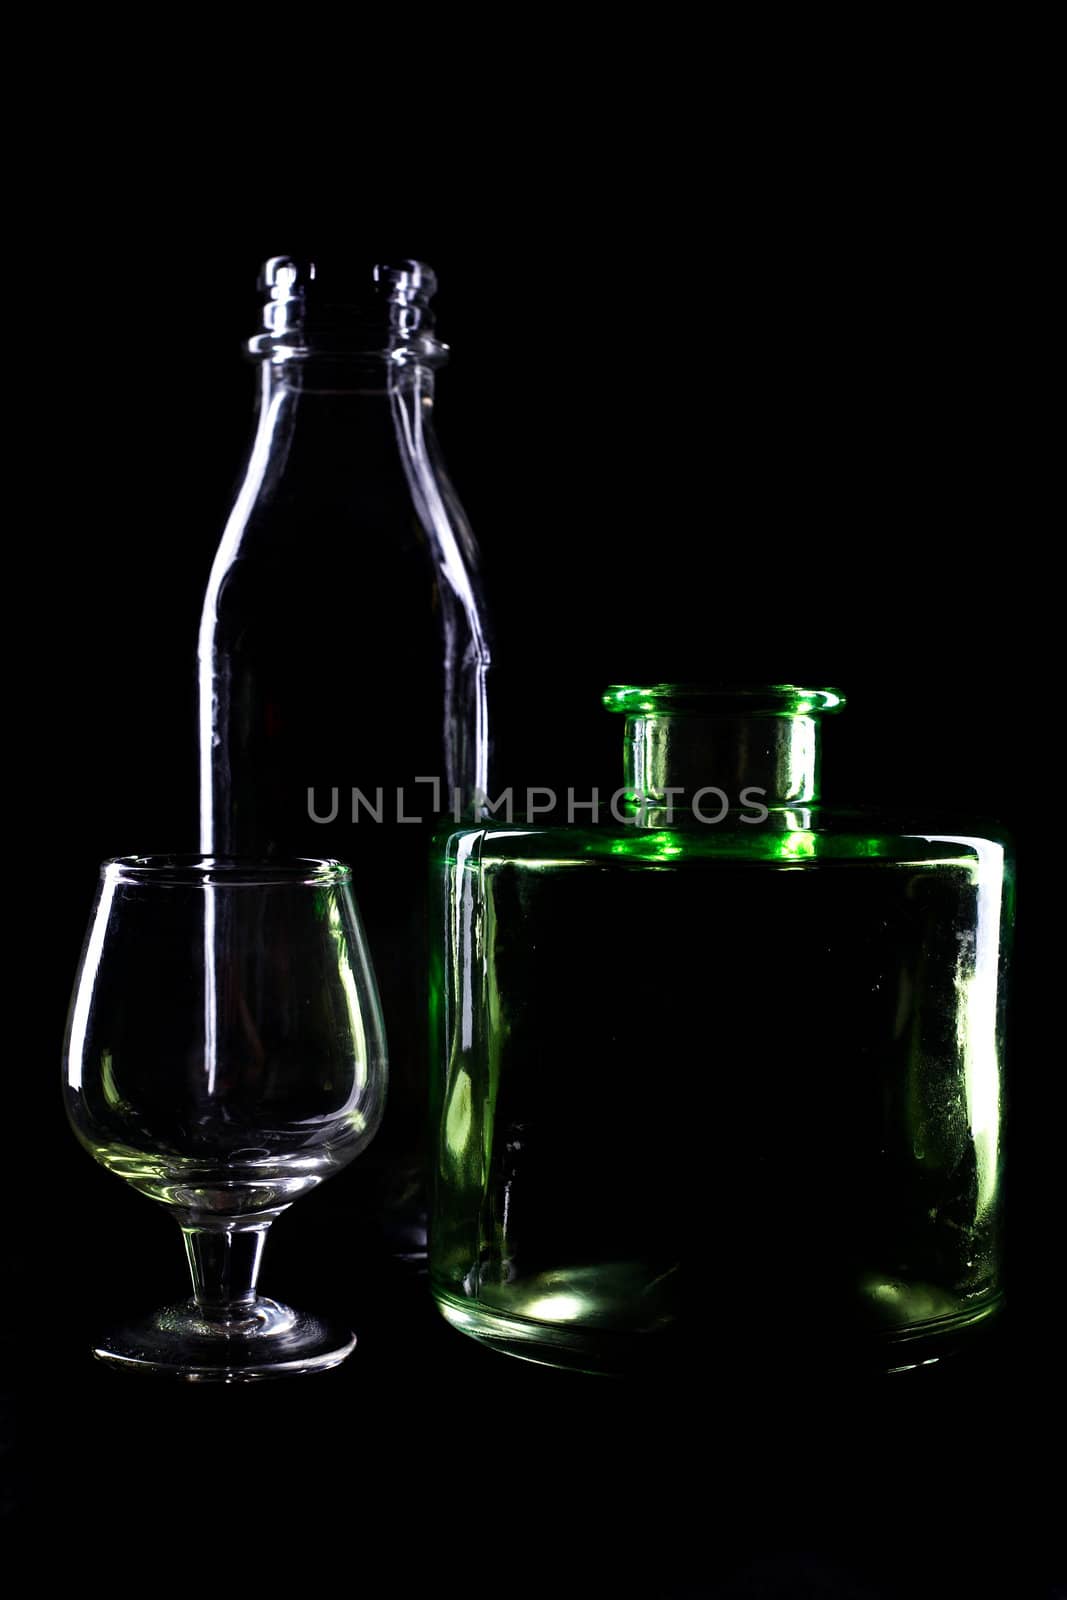 An image of bottles on black background